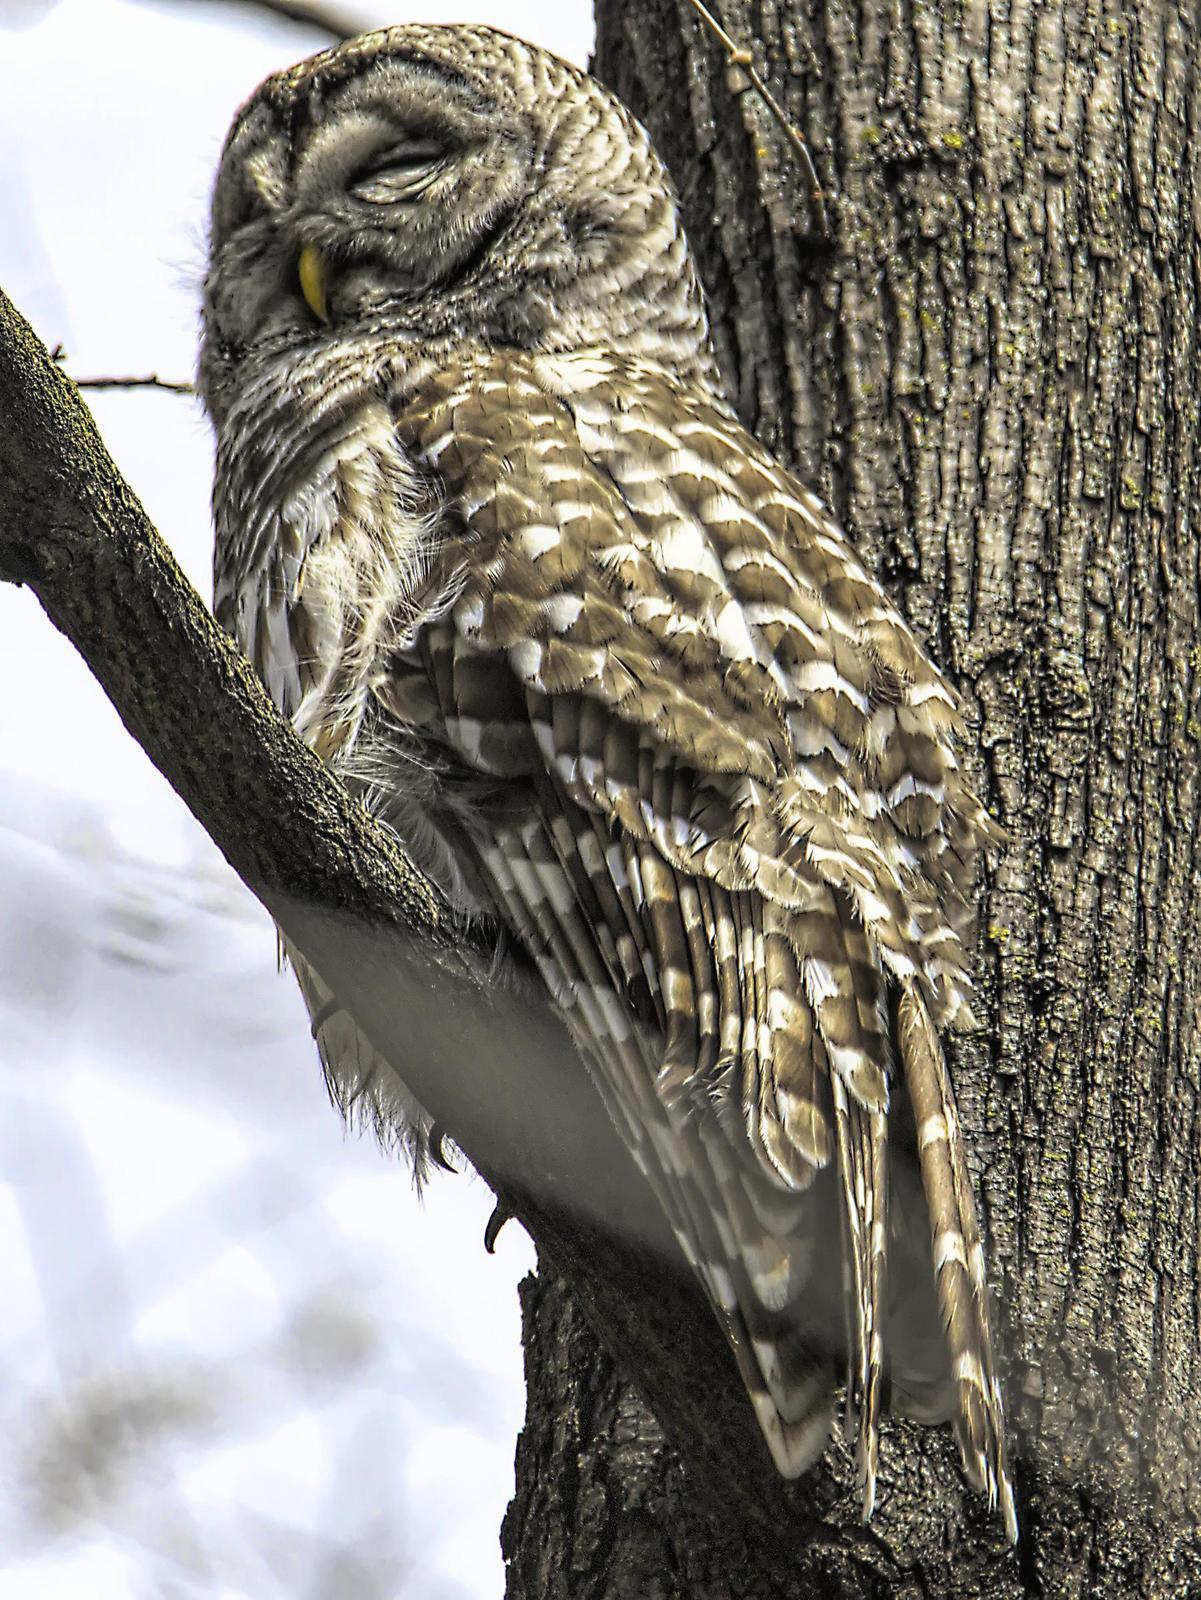 Barred Owl Photo by Dan Tallman